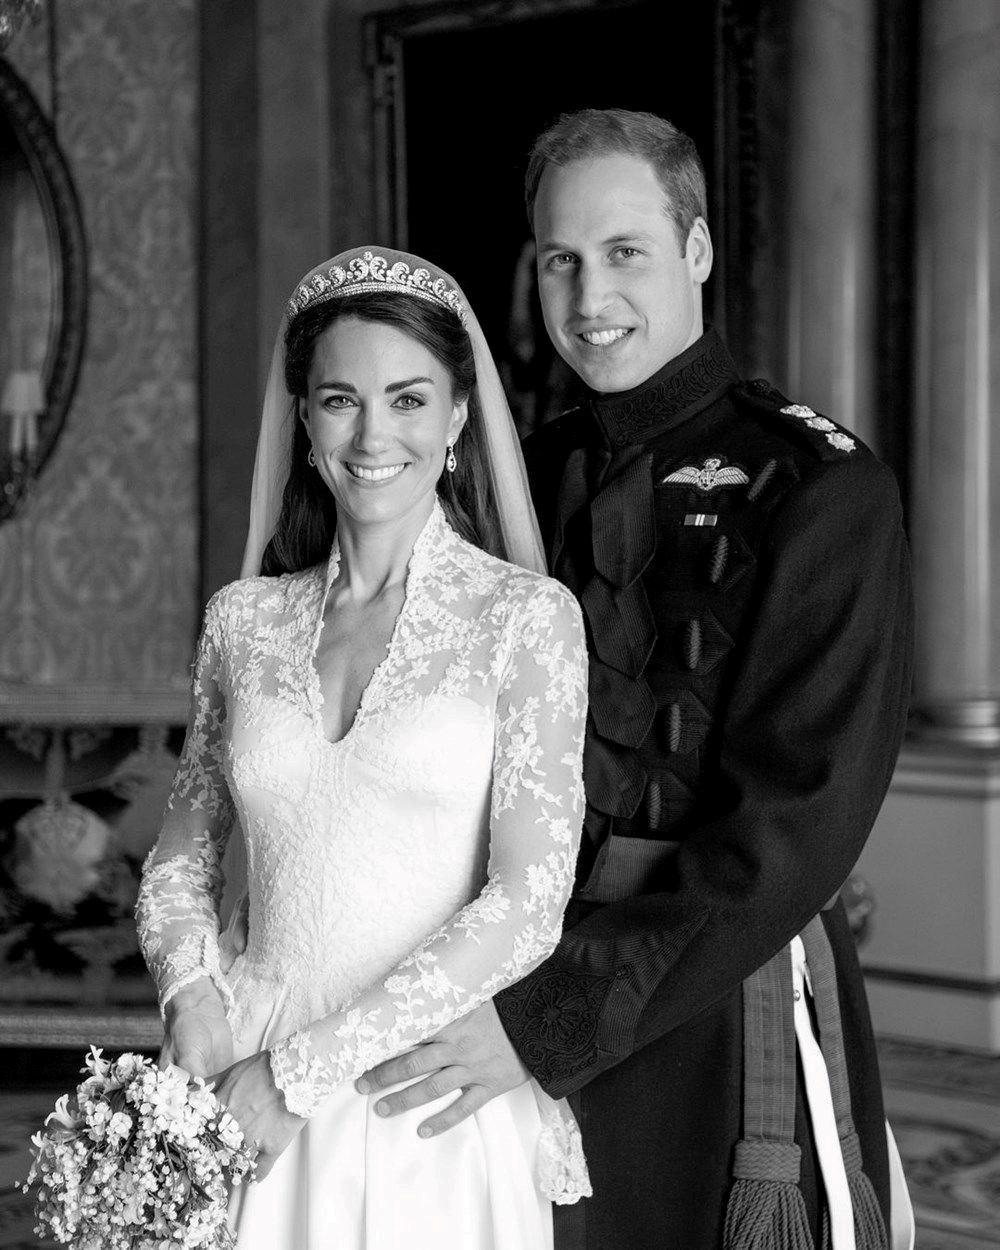 Prenses Kate Middleton sessizliğini bozdu - 2